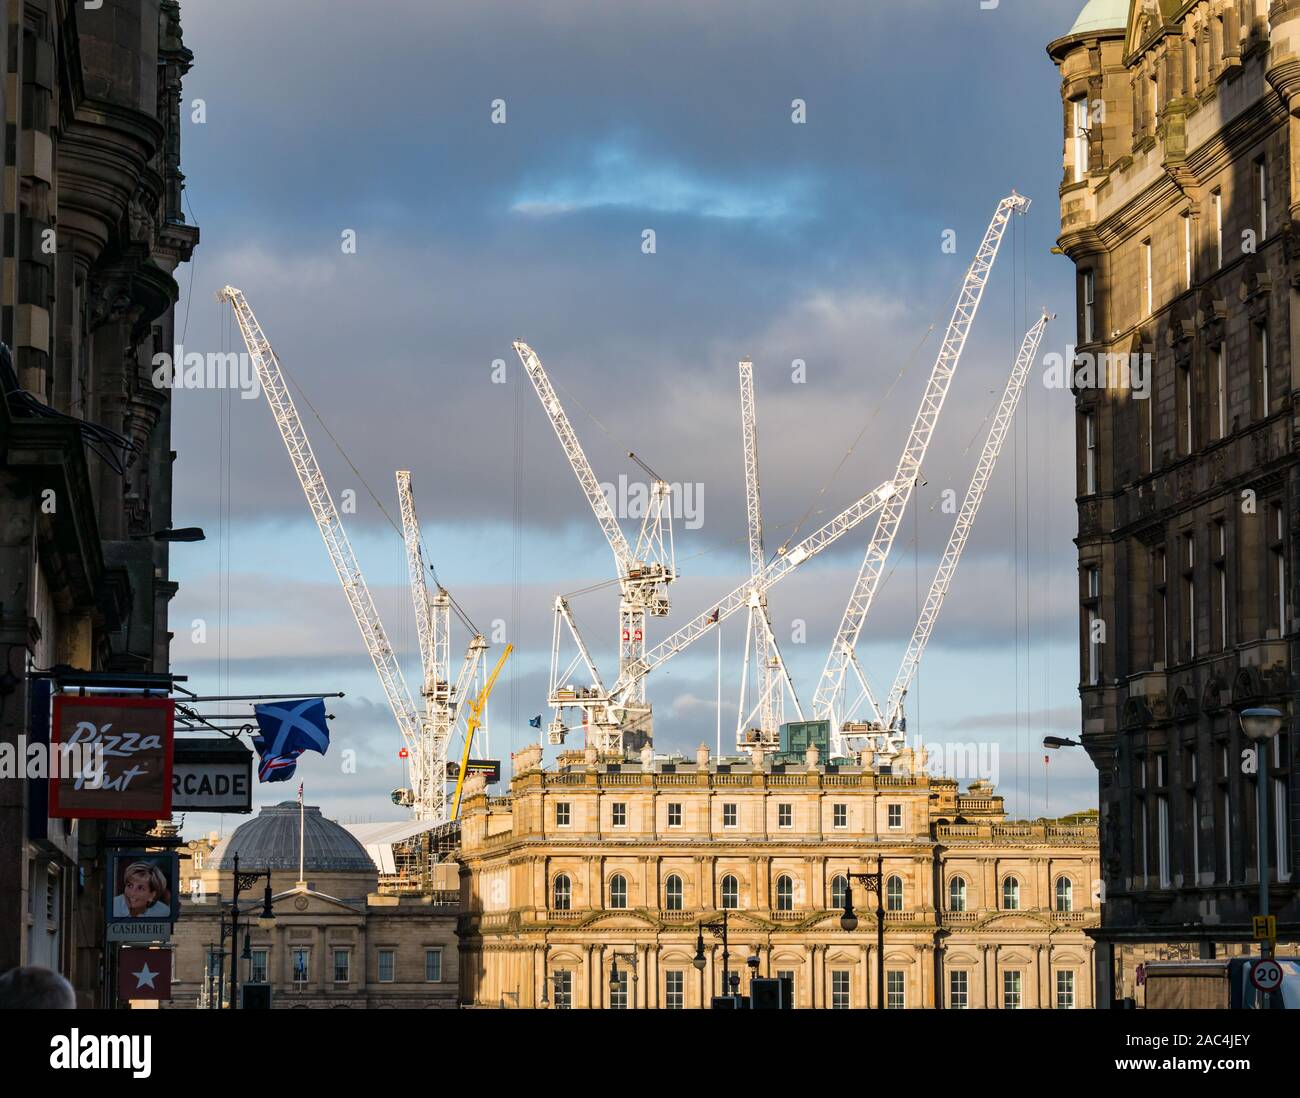 High cranes of St James reconstruction work overlooking North Bridge buildings, Edinburgh, Scotland, UK Stock Photo